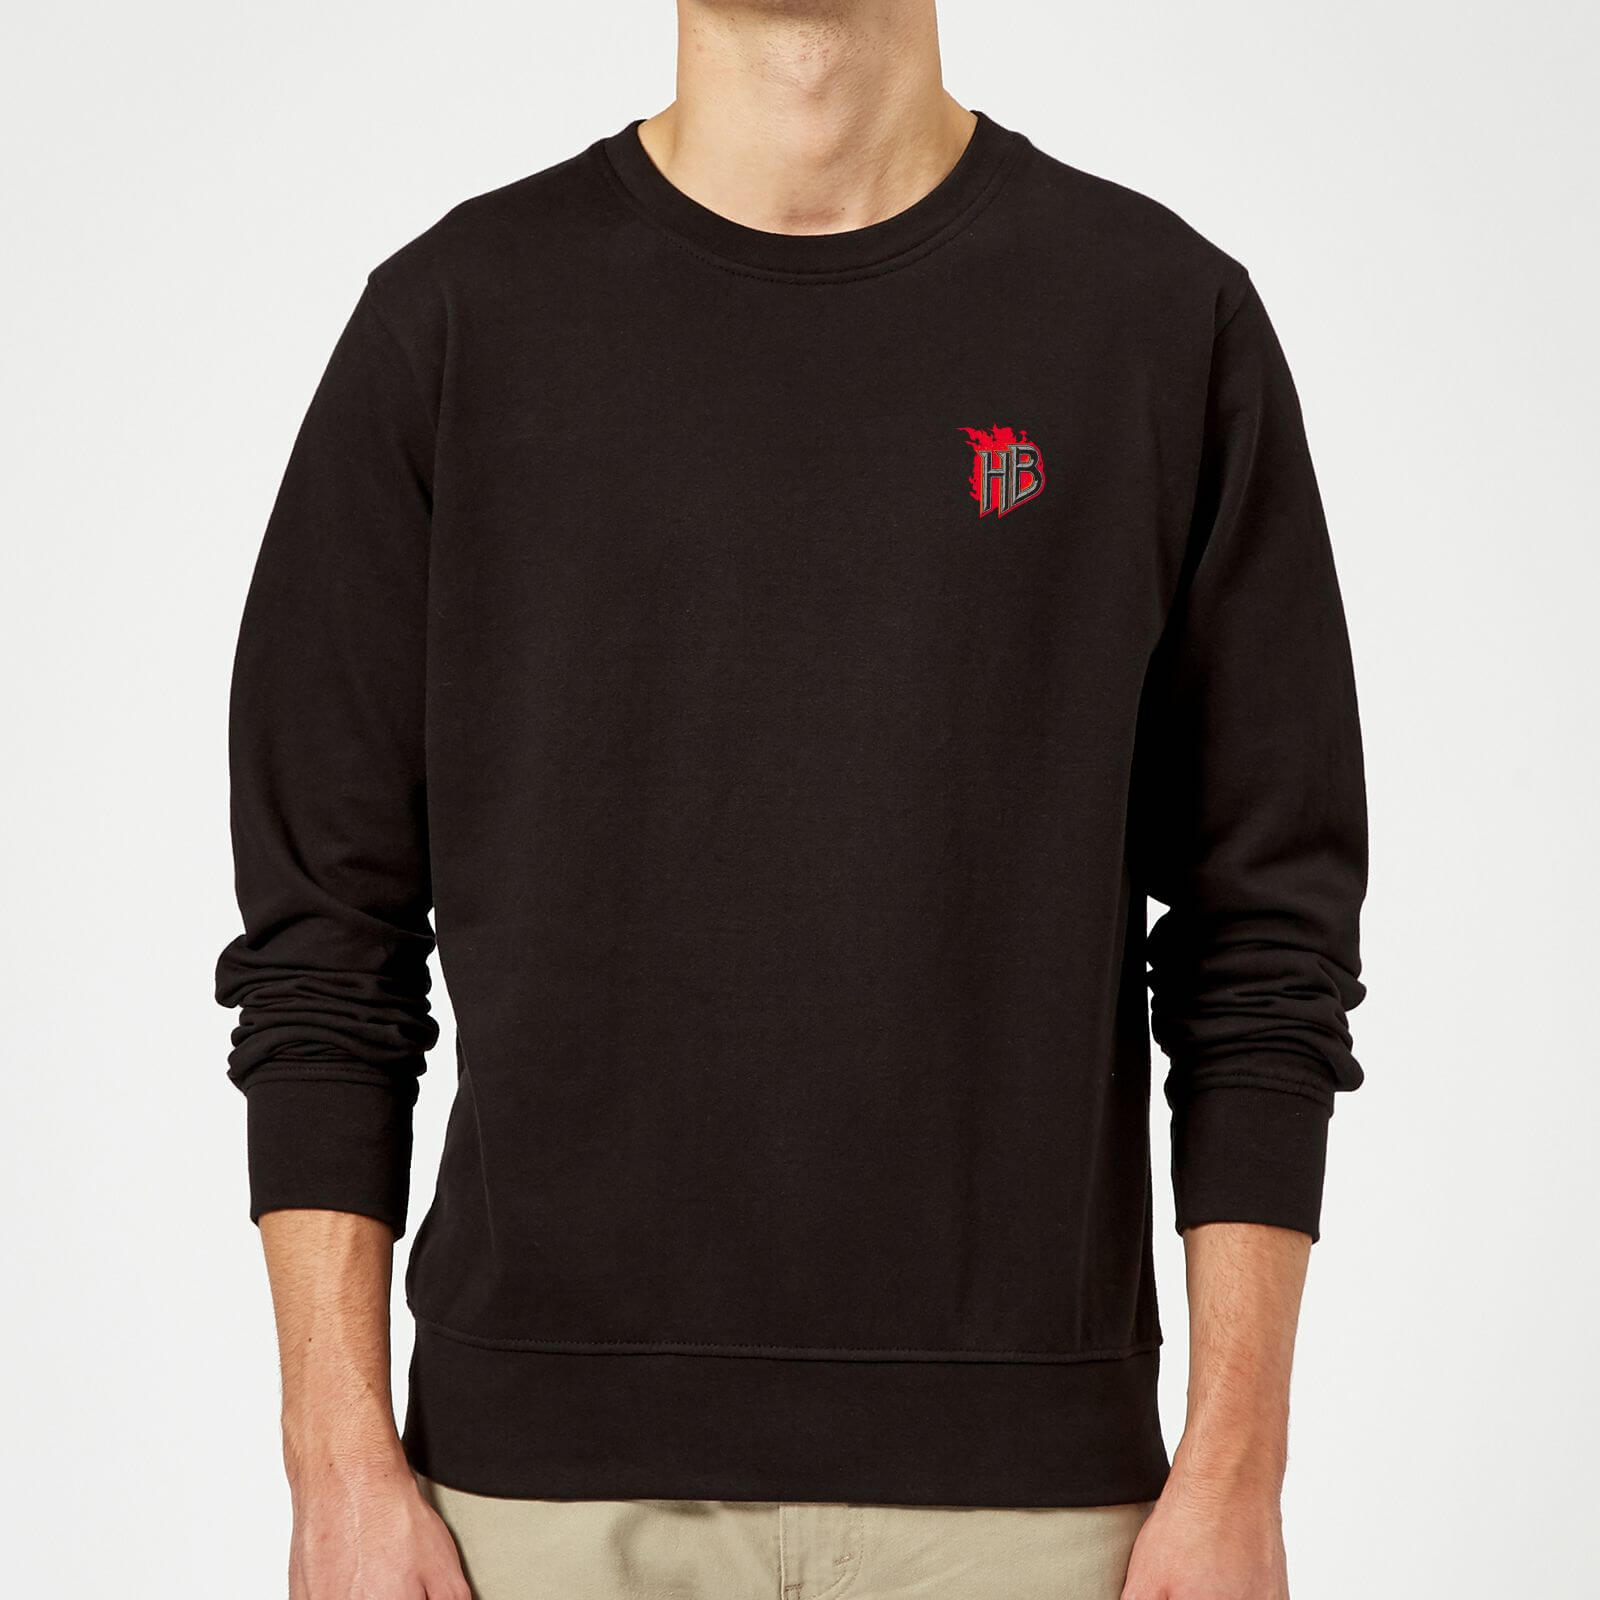 Hellboy Emblem Sweatshirt - Black - M